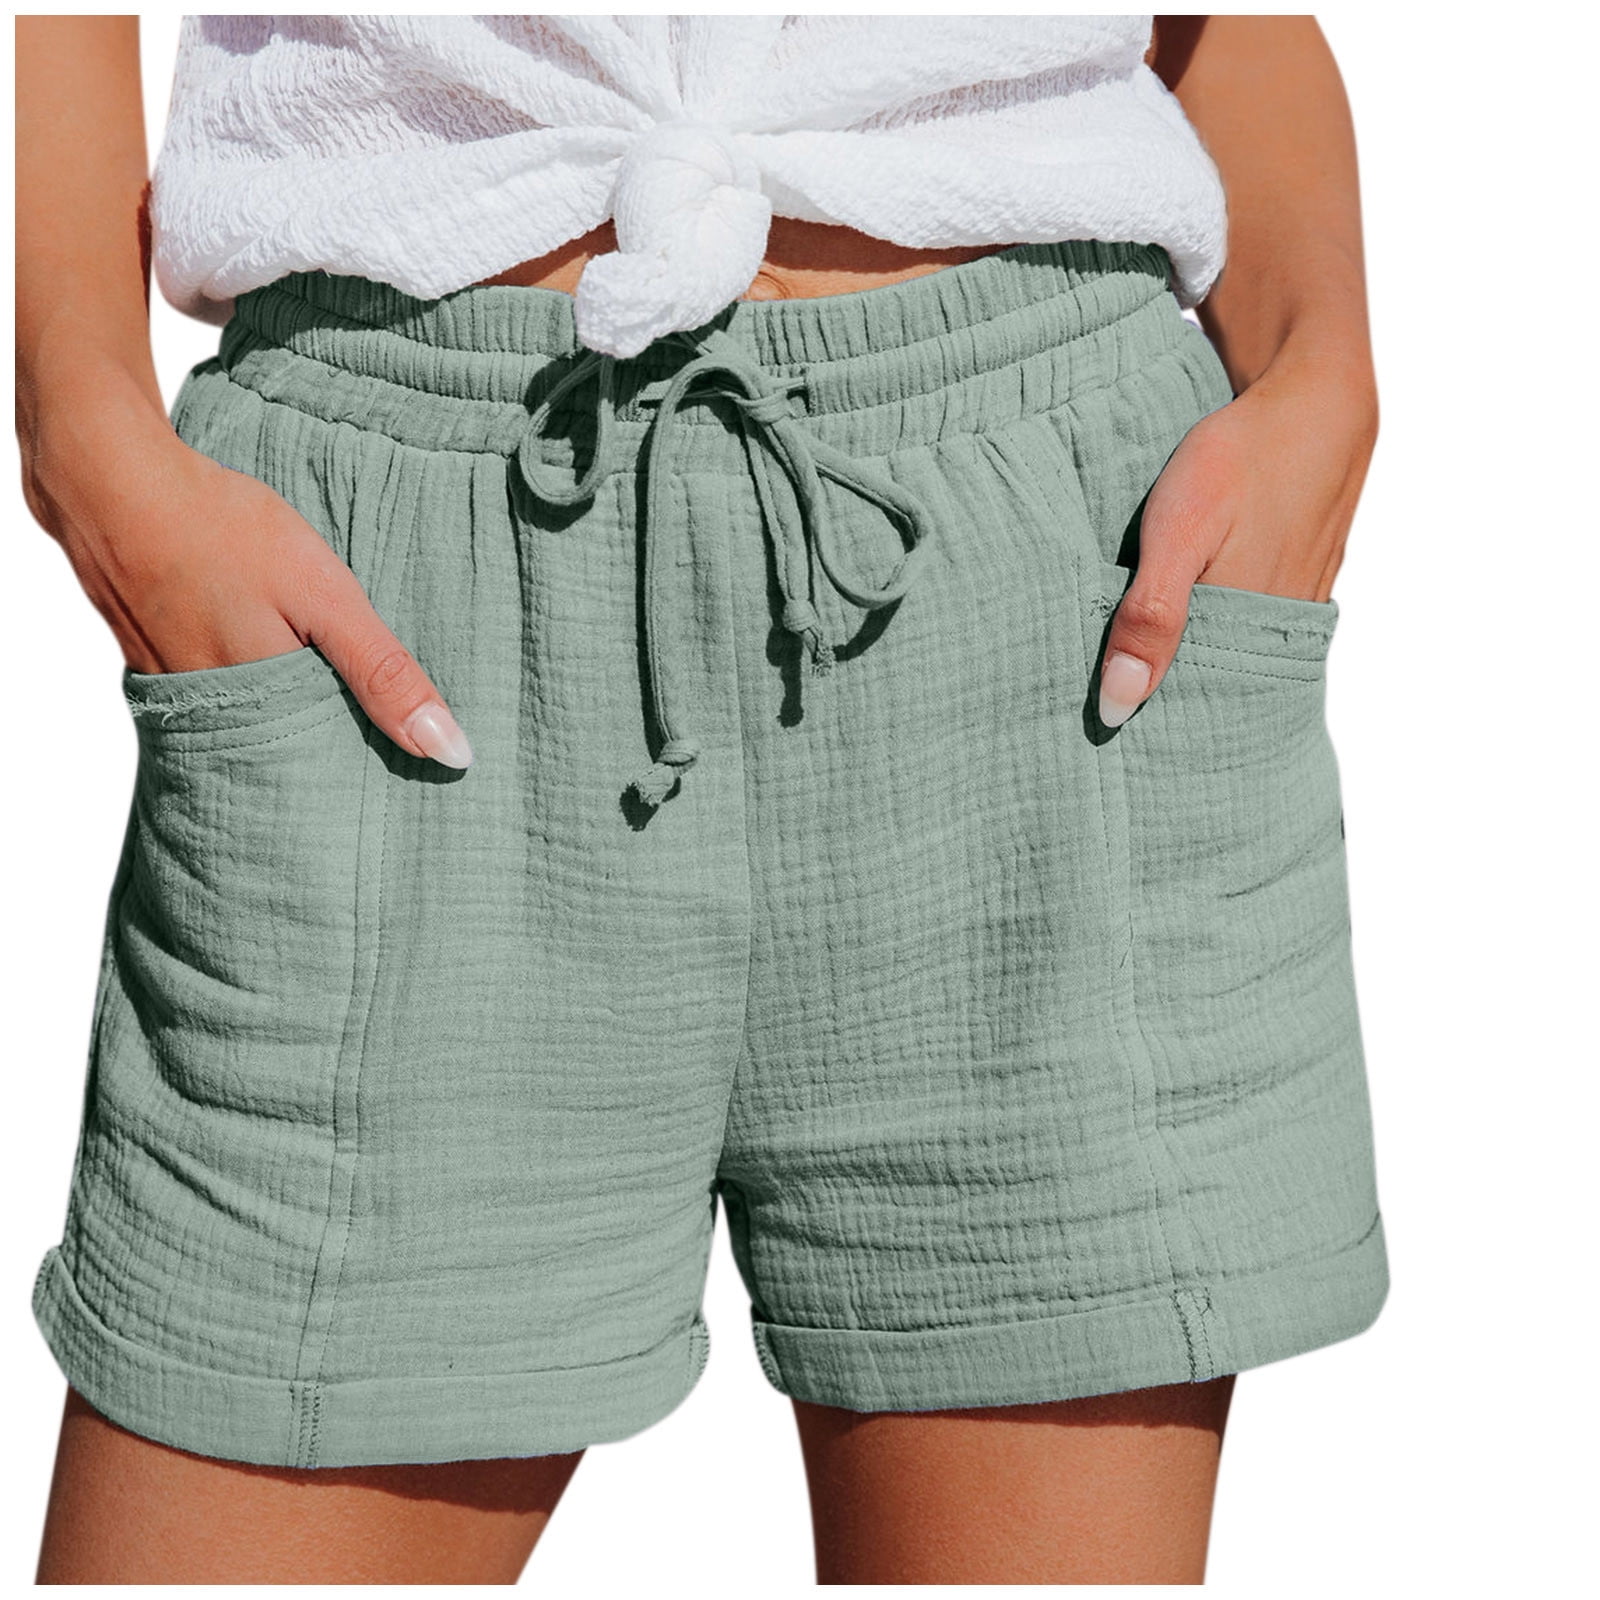 Dtydtpe sweatpants women Fashion Women Lady Summer Sport Shorts Beach Short  Pants cargo pants women Grey